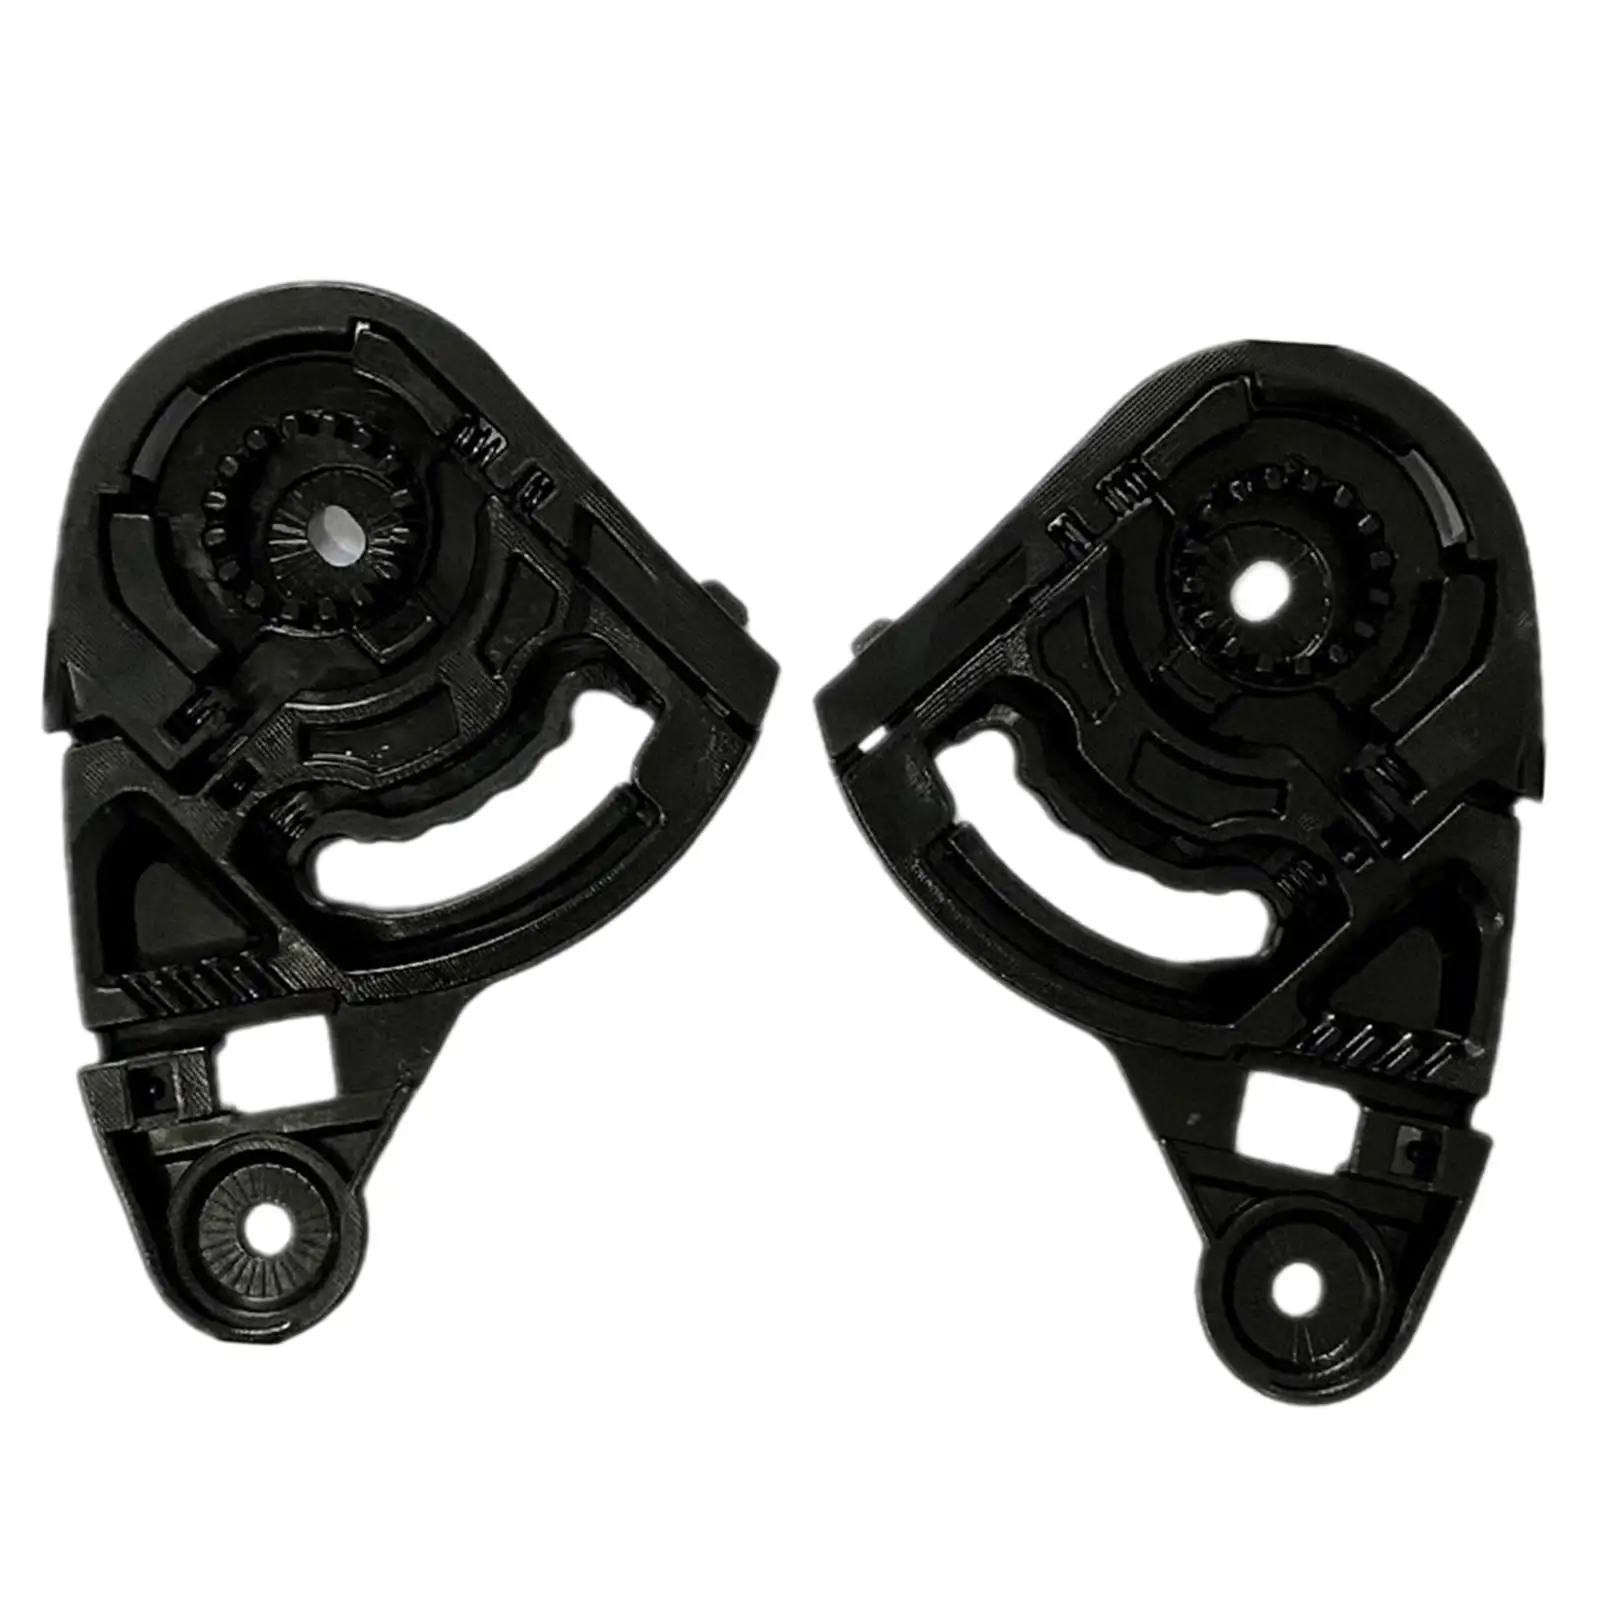  Plate/Ratchet Set,  Shield ,Durable  Holder Kit for MT ;  2  Bike  Motorcycle